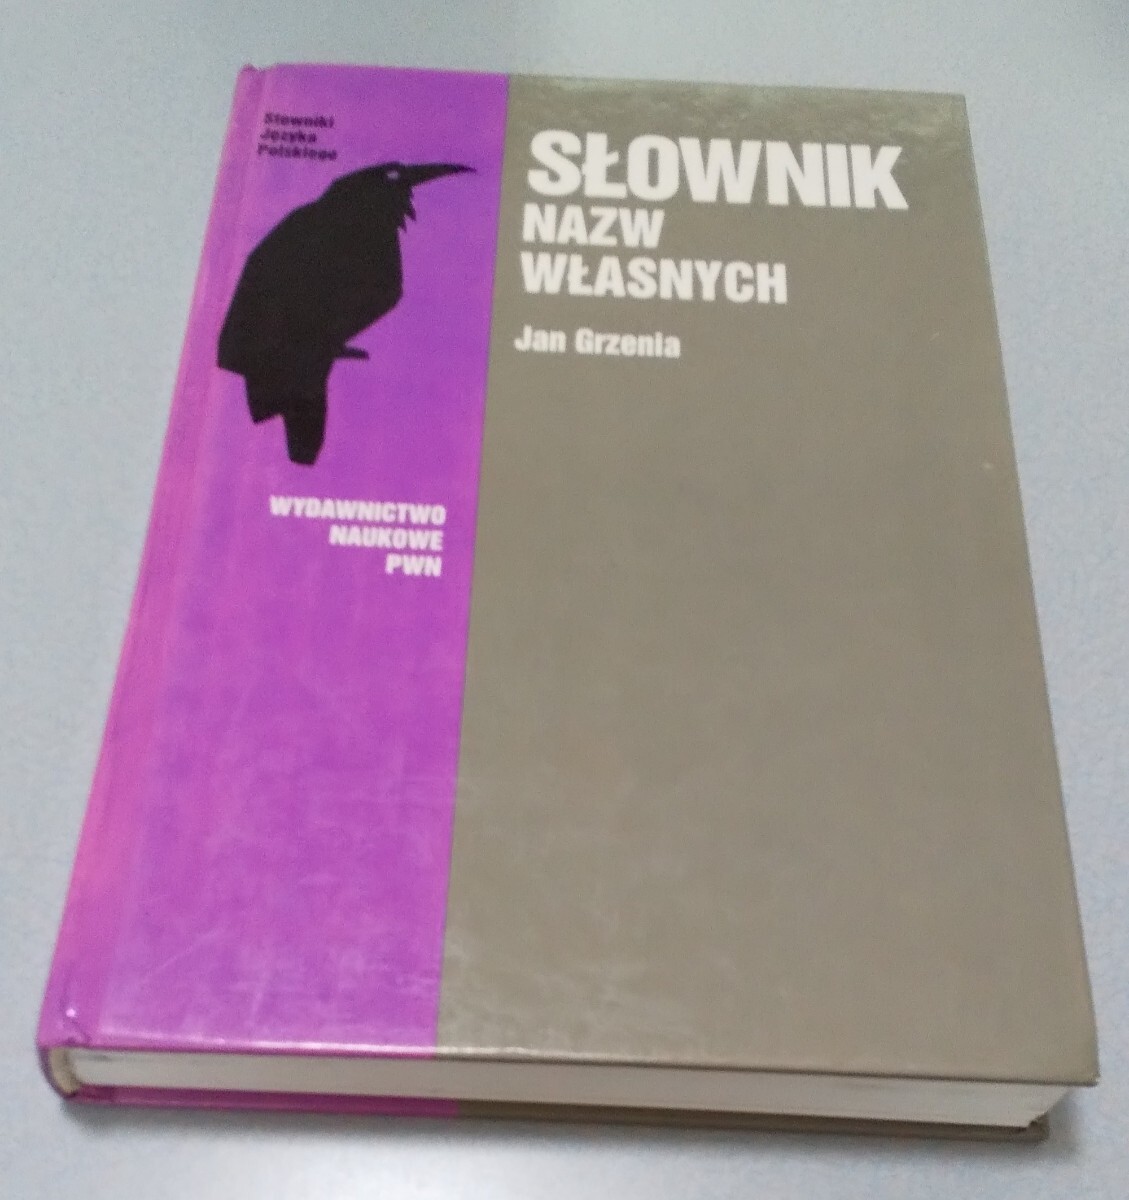 [. famous . dictionary ] Poland language dictionary [Slownik nazw wlasnych] Wydawnictwo naukowe PWN,1998 year 